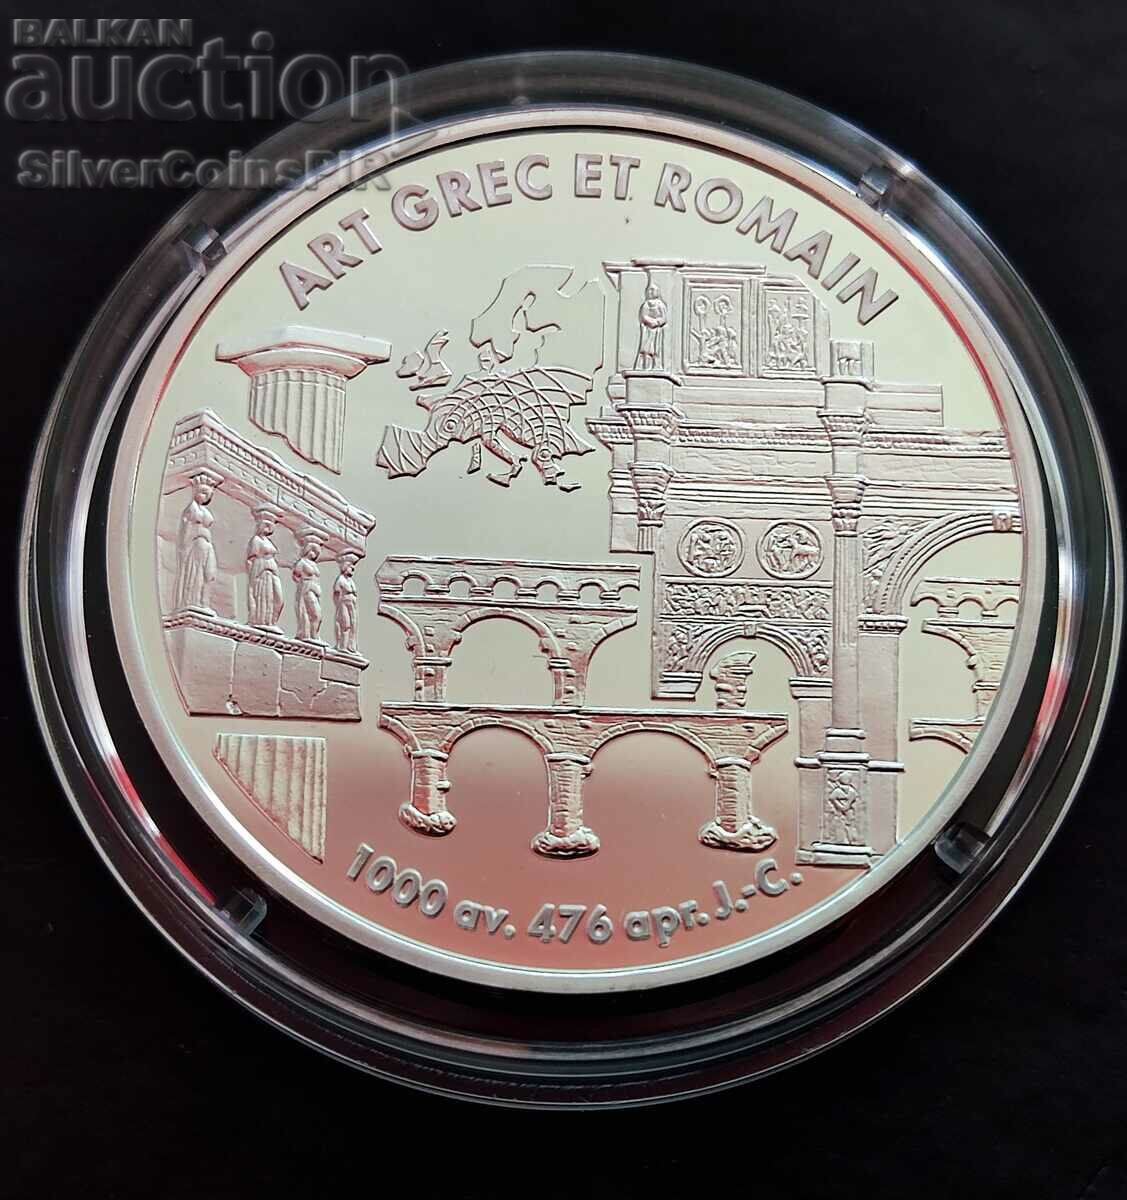 Silver 6.55957 Franc Greco-Roman Art 1999 France